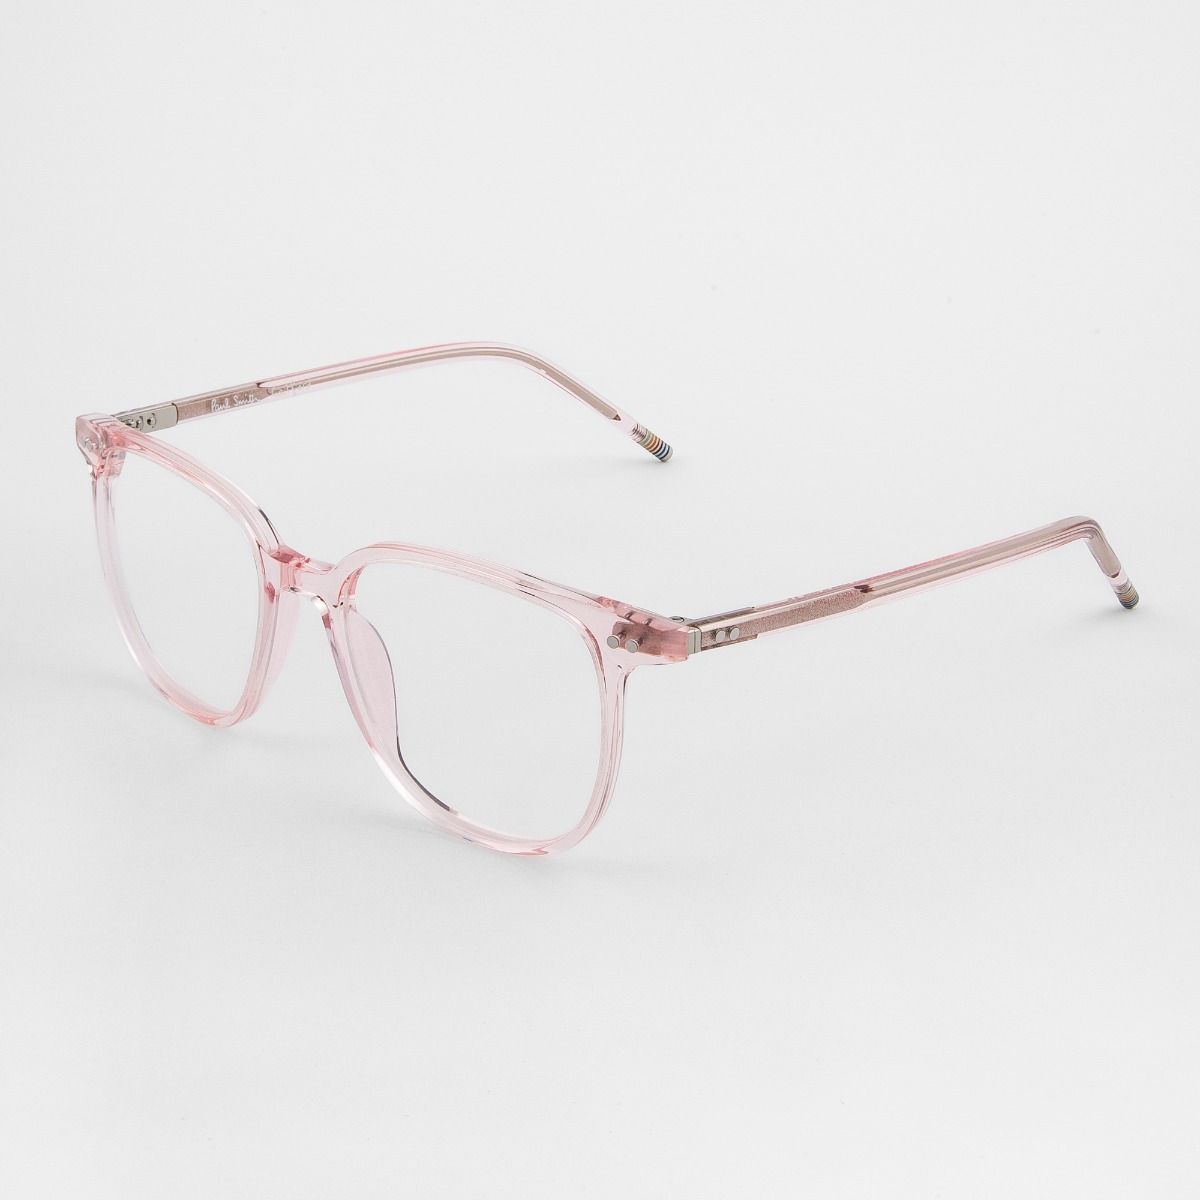 Paul Smith Catford Optical Cat-Eye Glasses